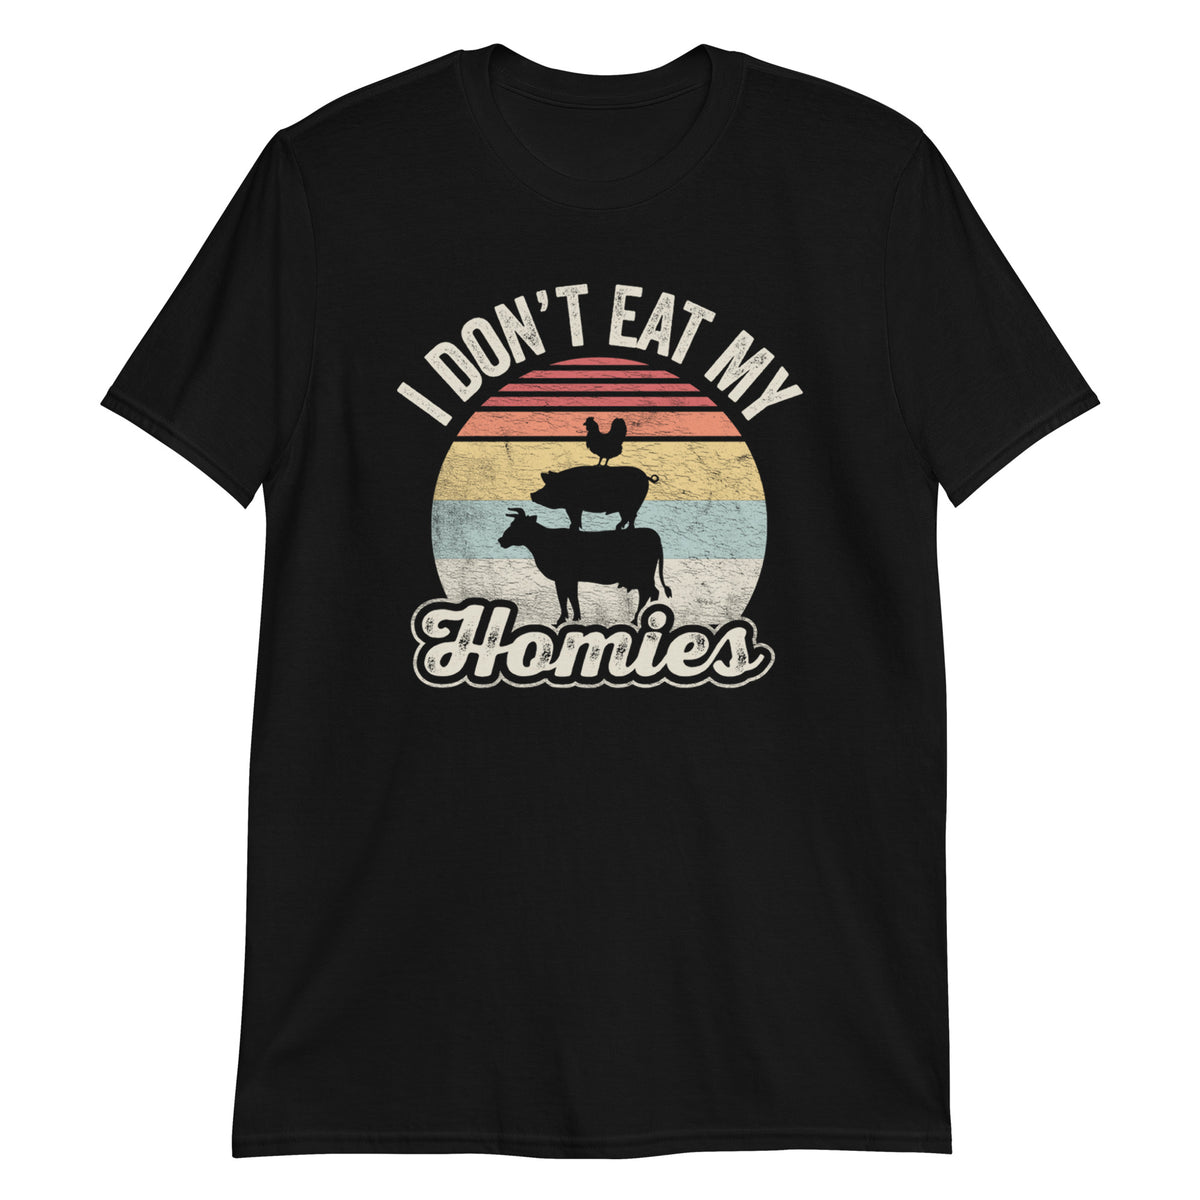 I Don't Eat My Homies T-Shirt